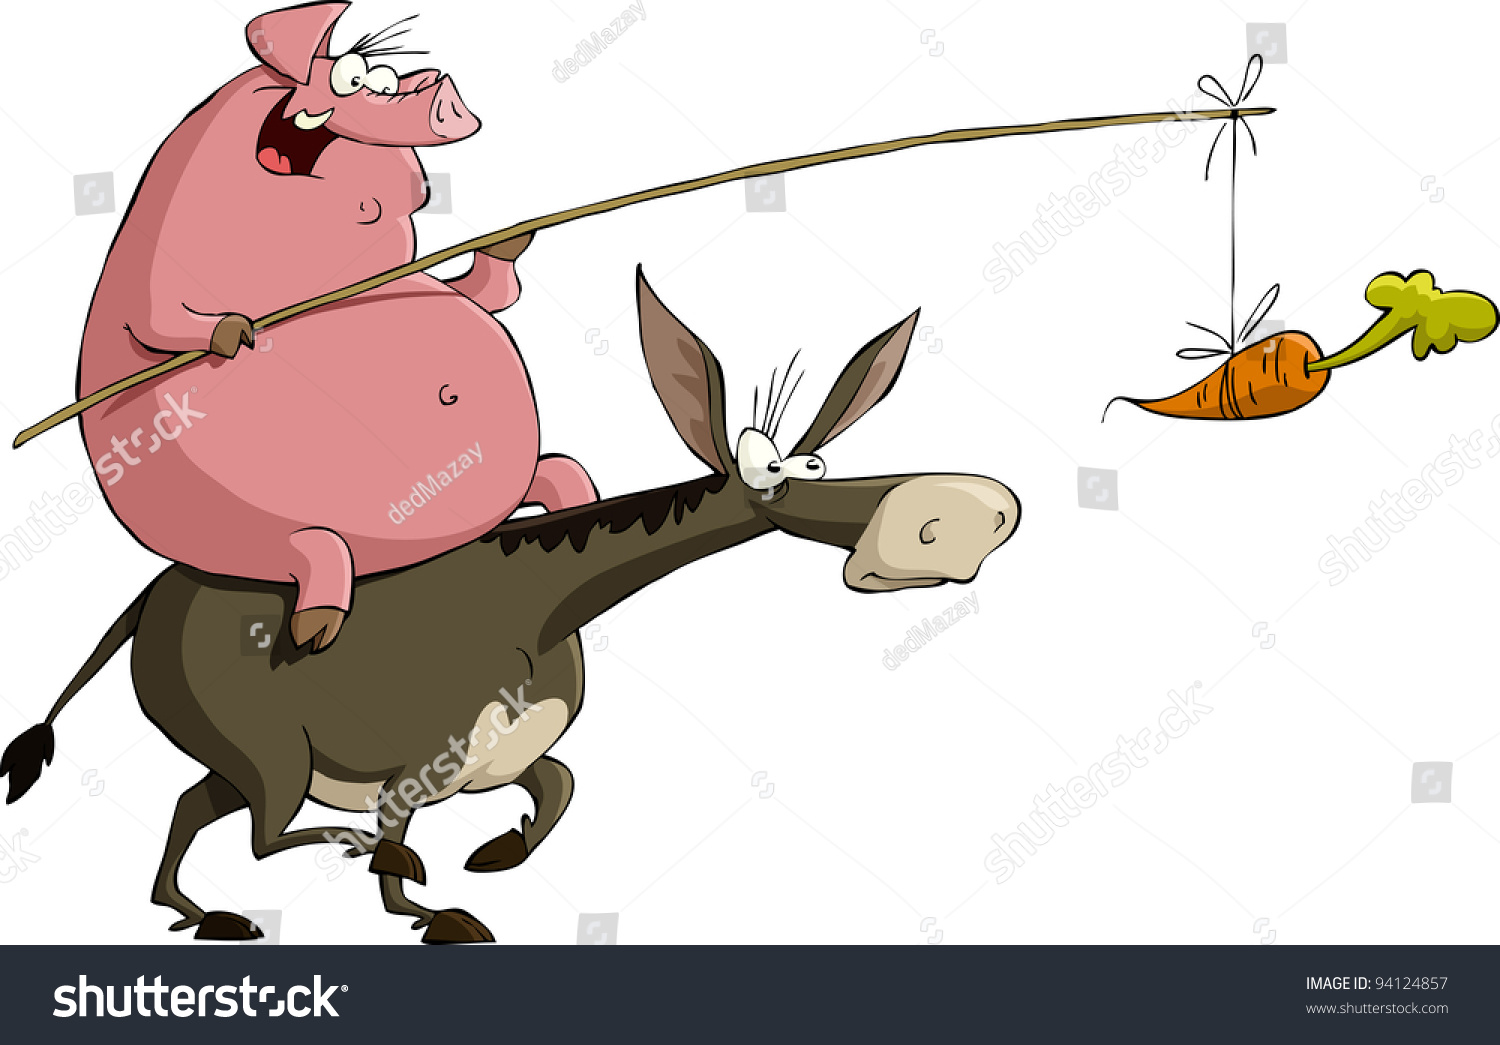 stock-vector-pig-rides-on-a-donkey-vector-illustration-94124857.jpg